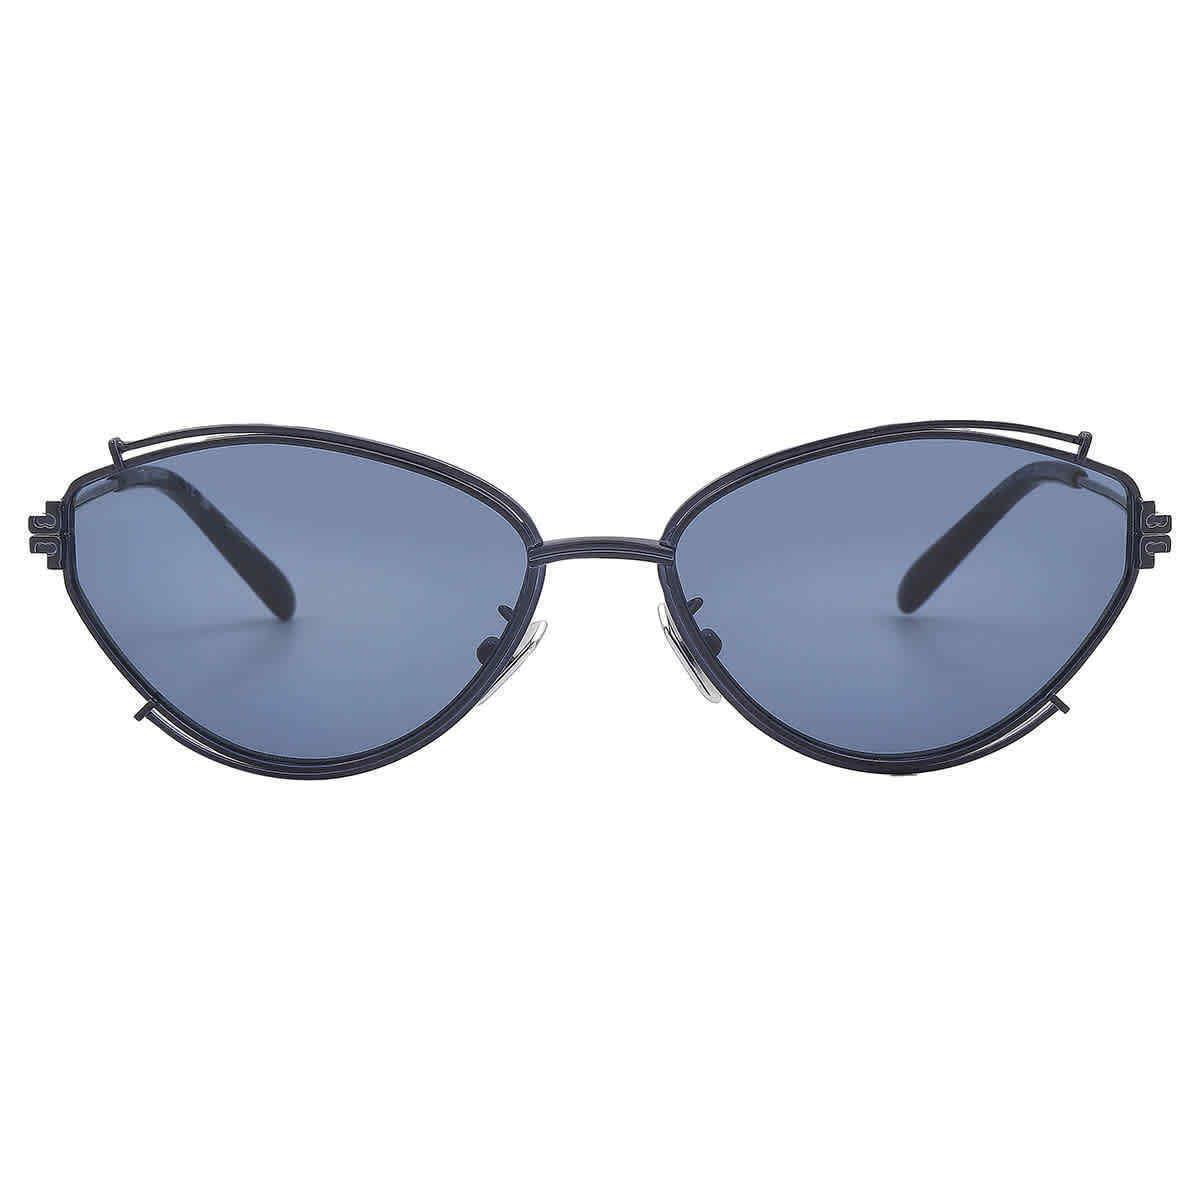 Tory Burch Dark Blue Oval Ladies Sunglasses TY6103 335080 55 TY6103 335080 55